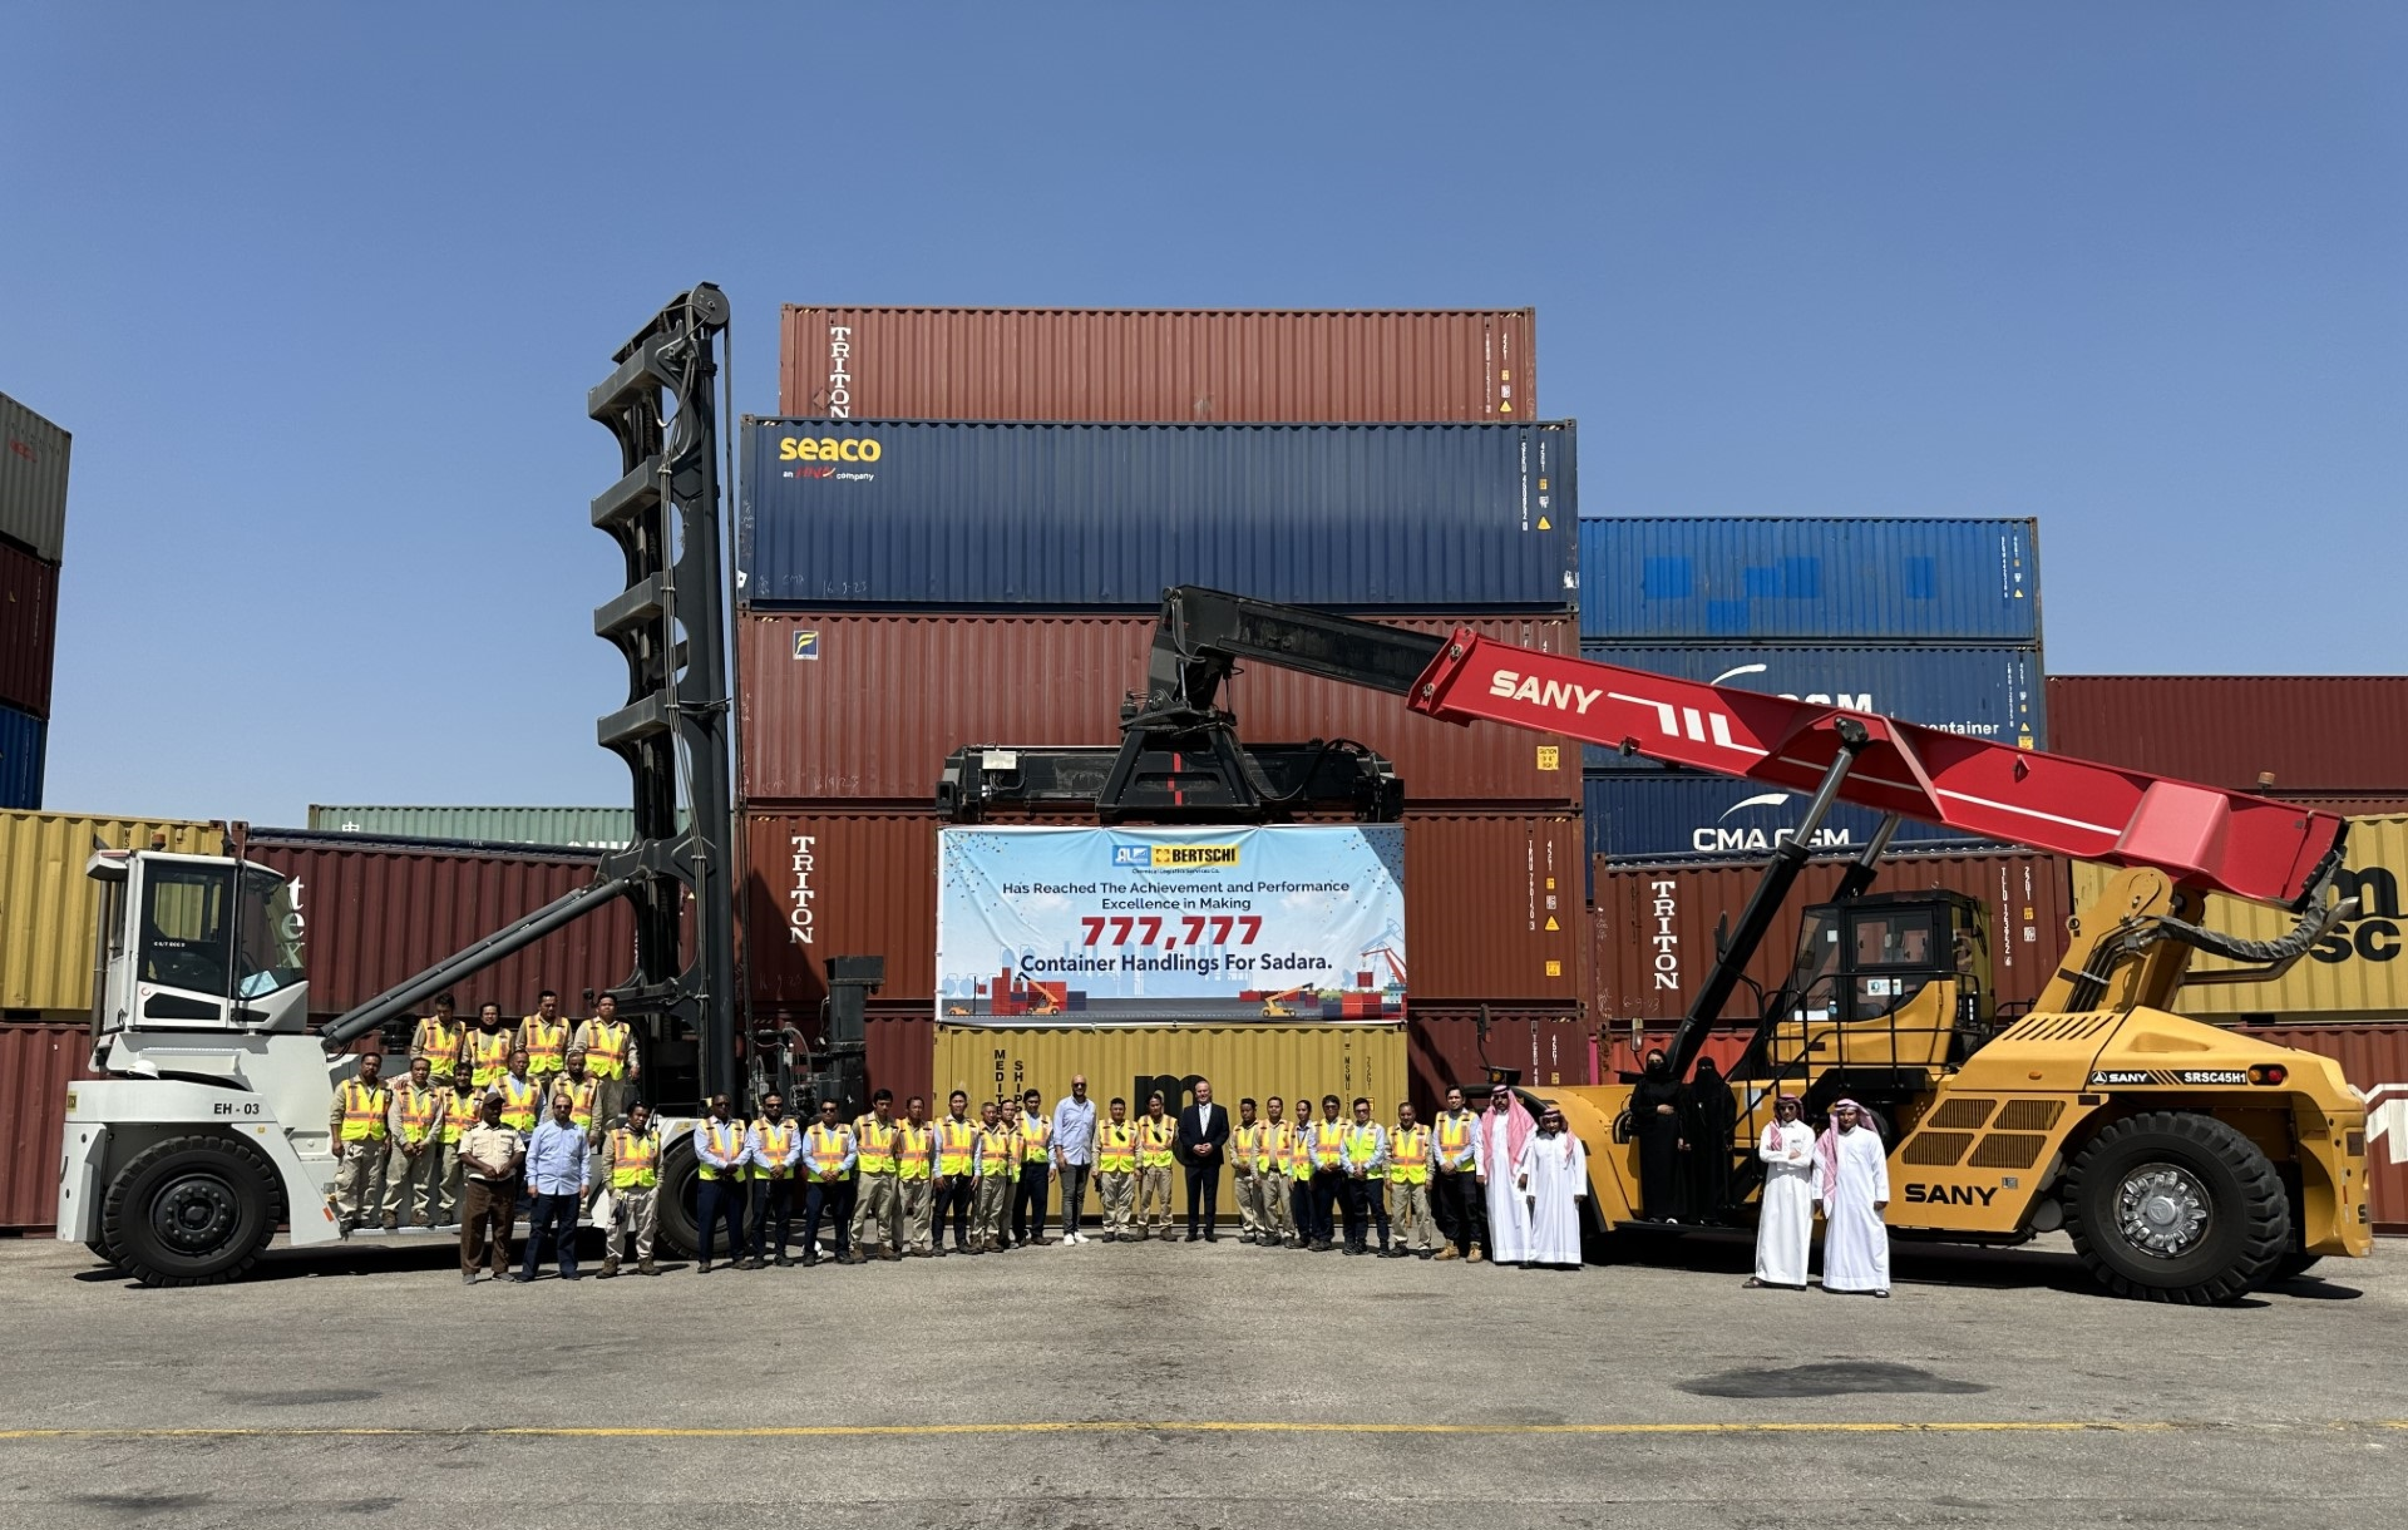 Celebrating 777,777 Safe Container Handlings